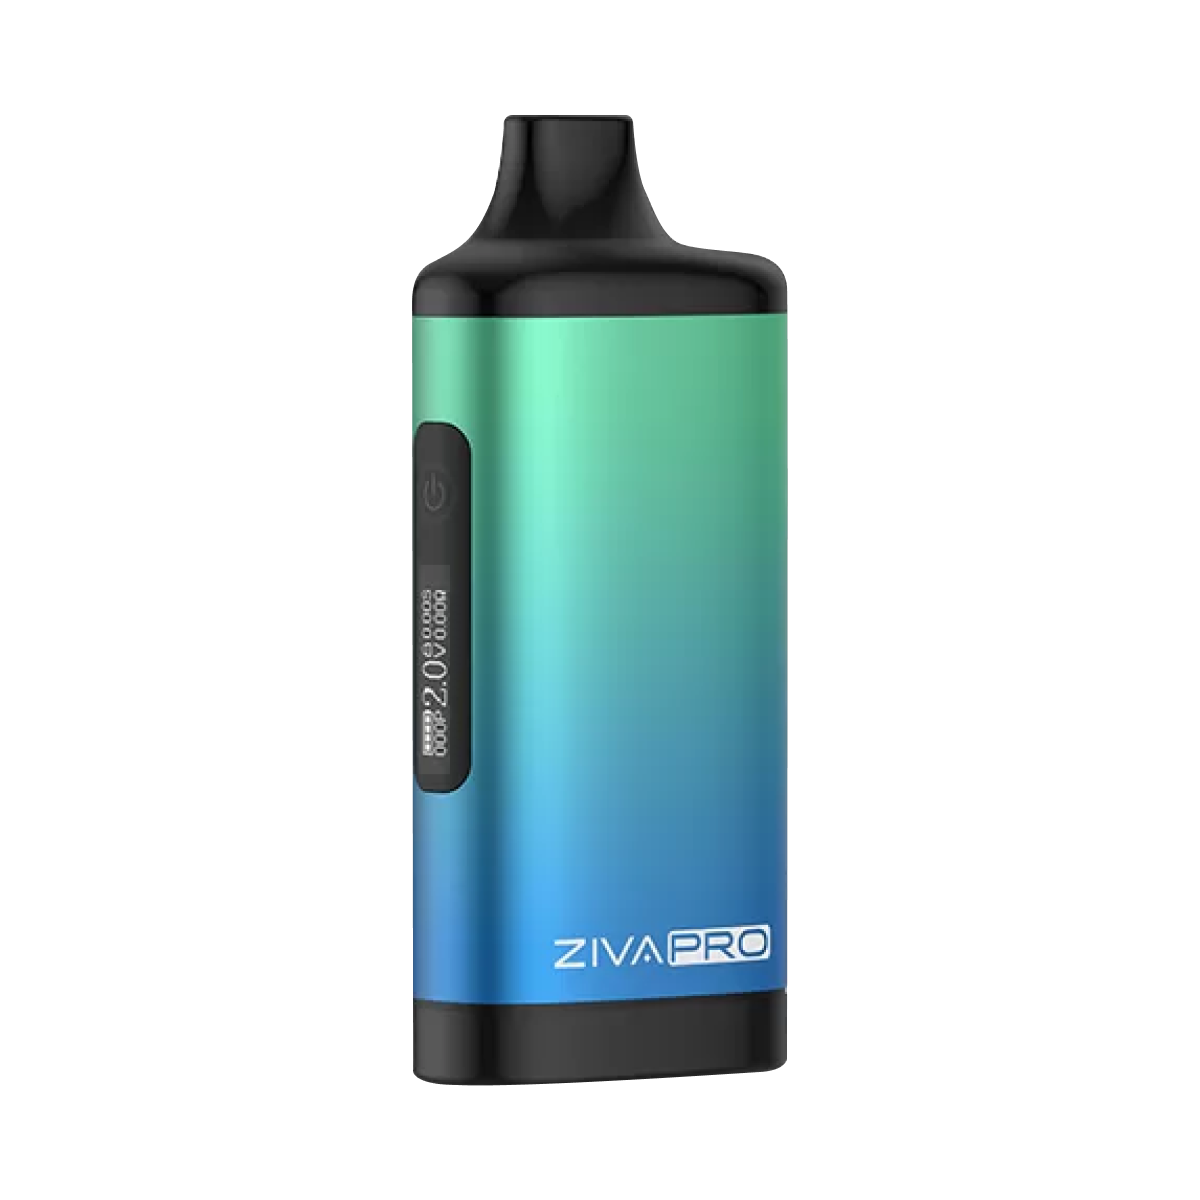 Yocan Ziva Pro Smart Vaporizer Mod - details